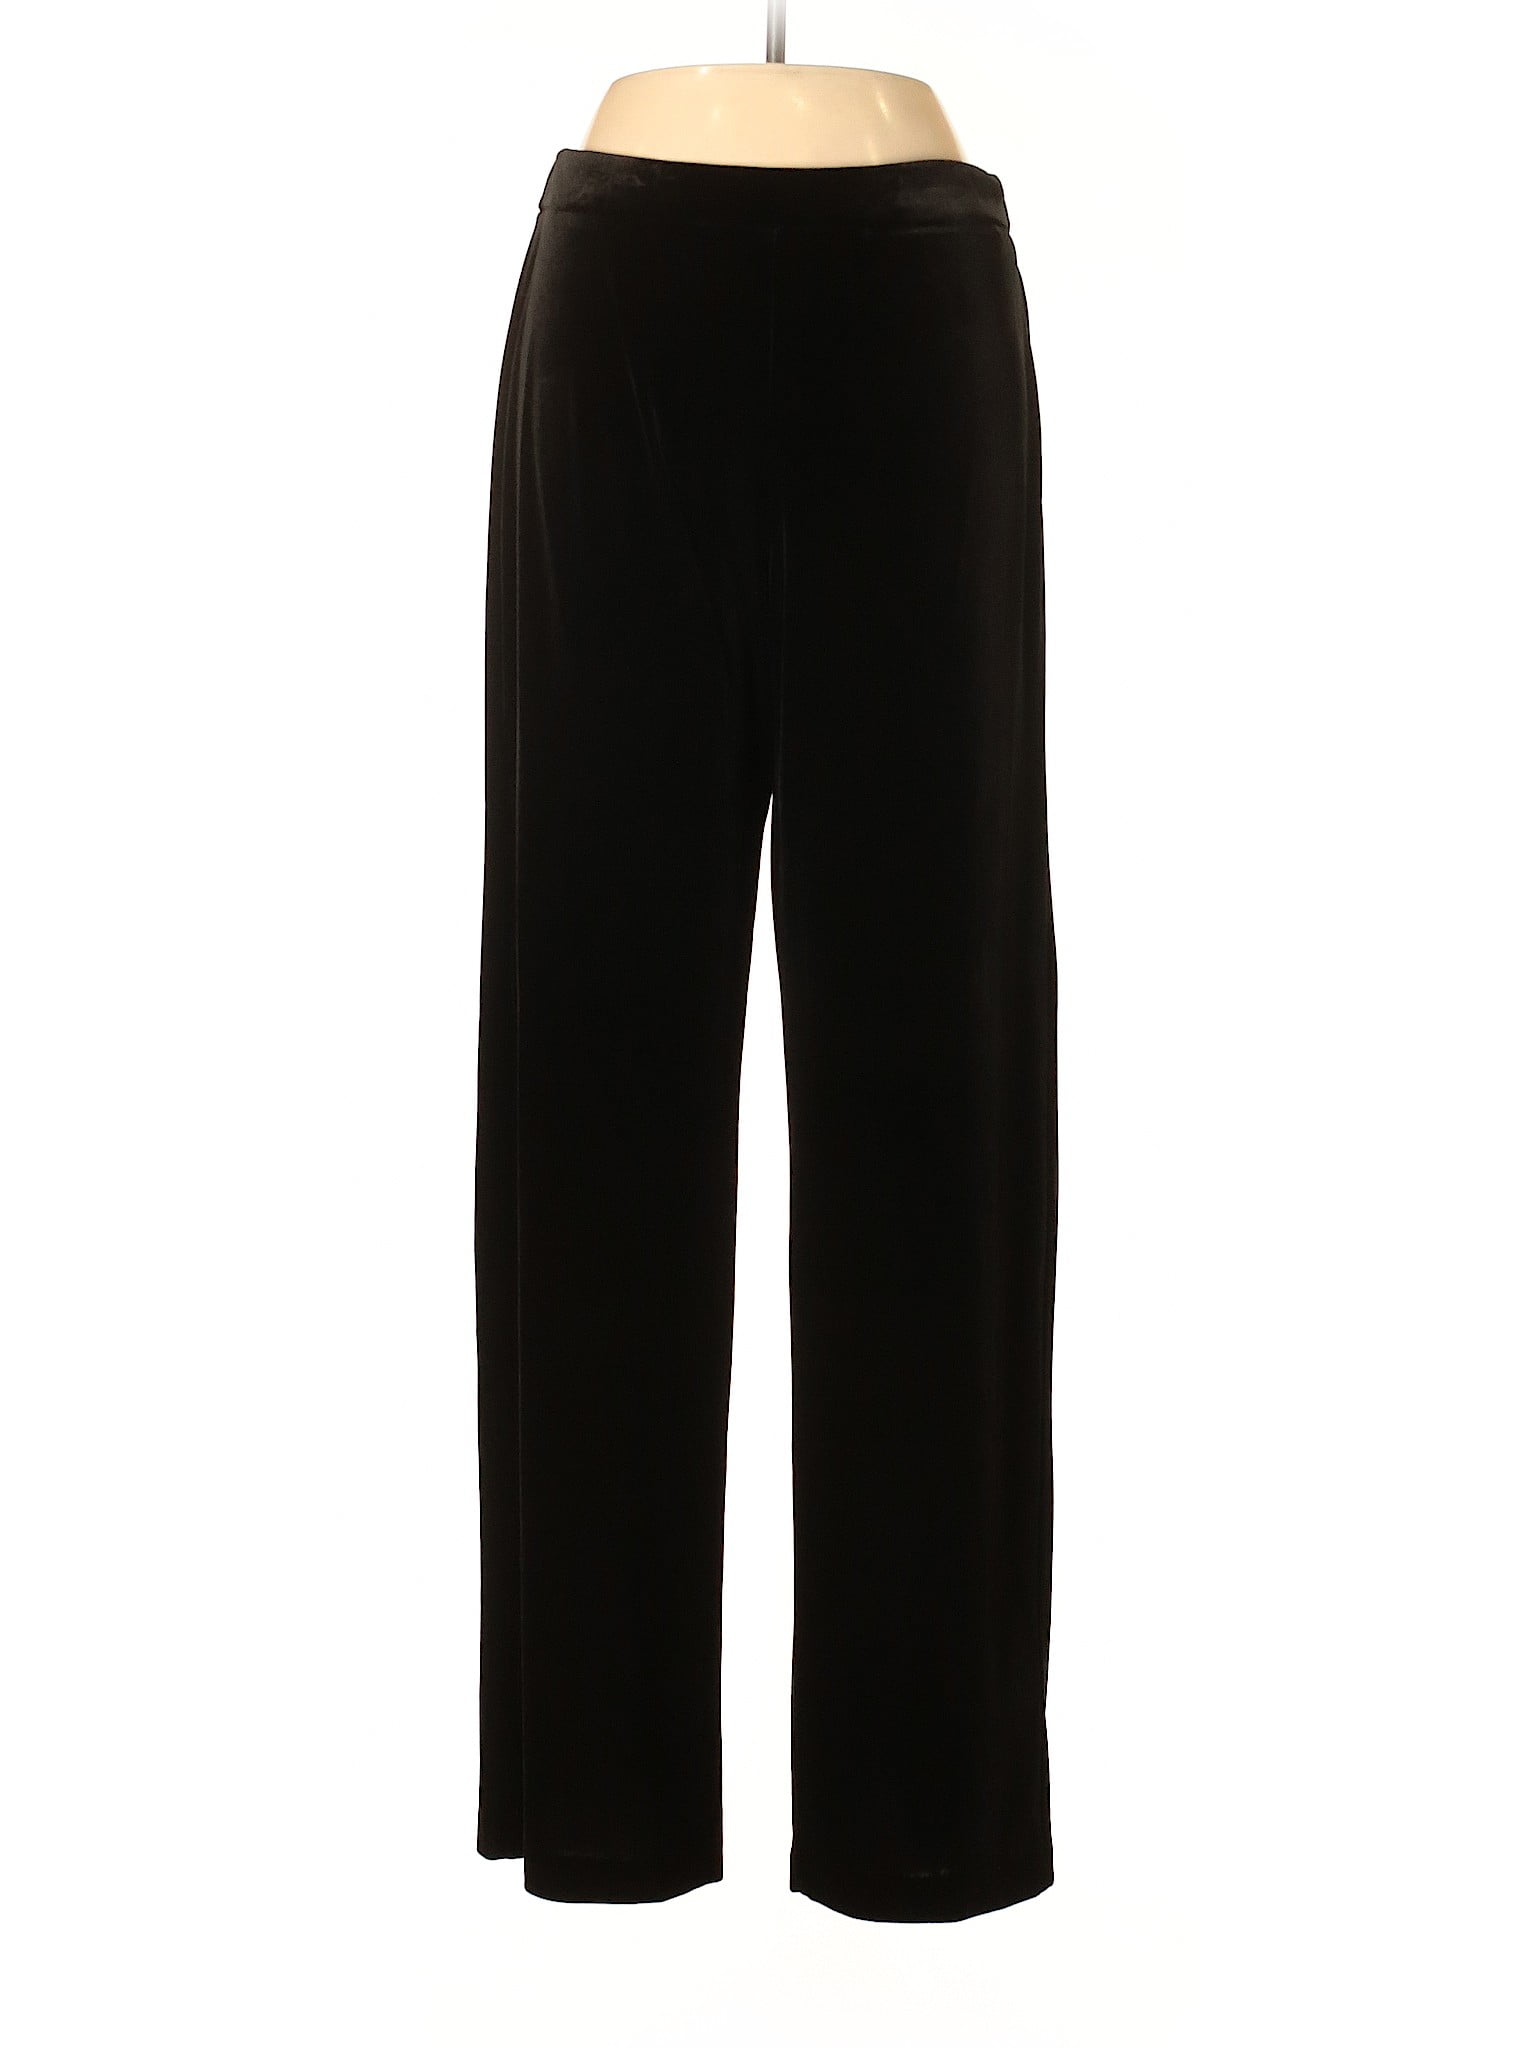 Neiman Marcus - Pre-Owned Neiman Marcus Women's Size M Velour Pants ...